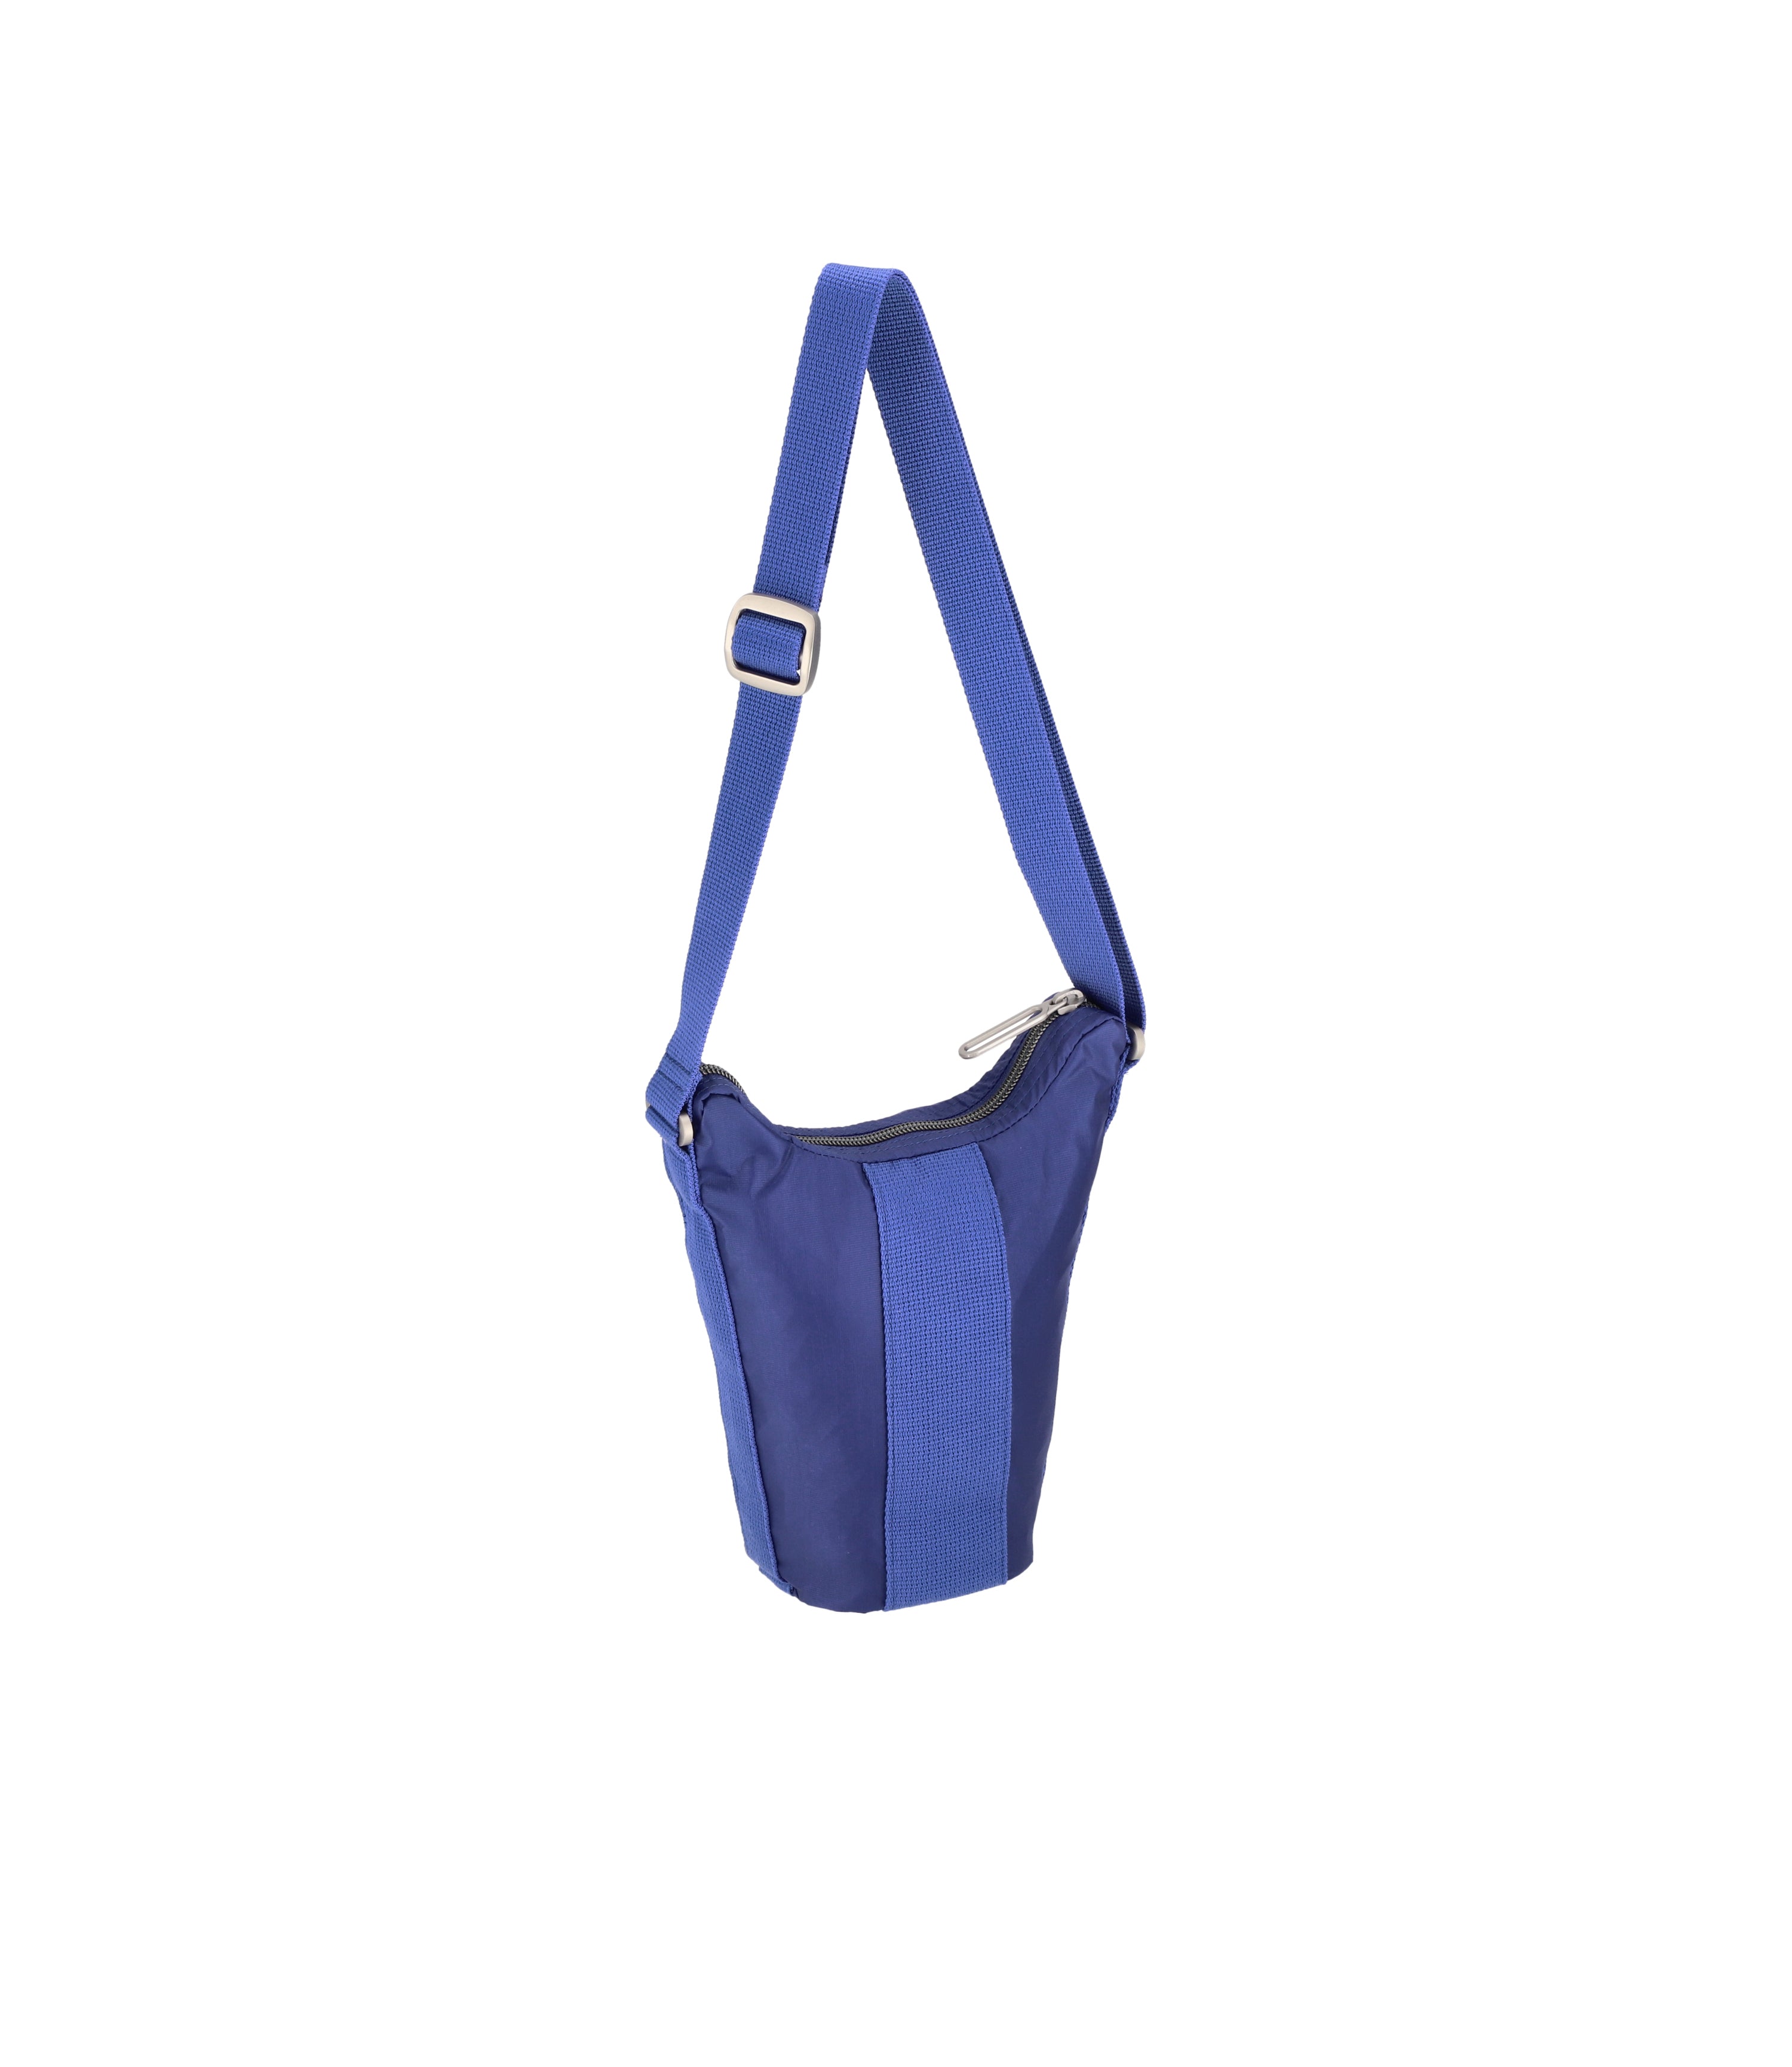 Fashionable and Sporty Bags | Nylon Handbags by LeSportsac 